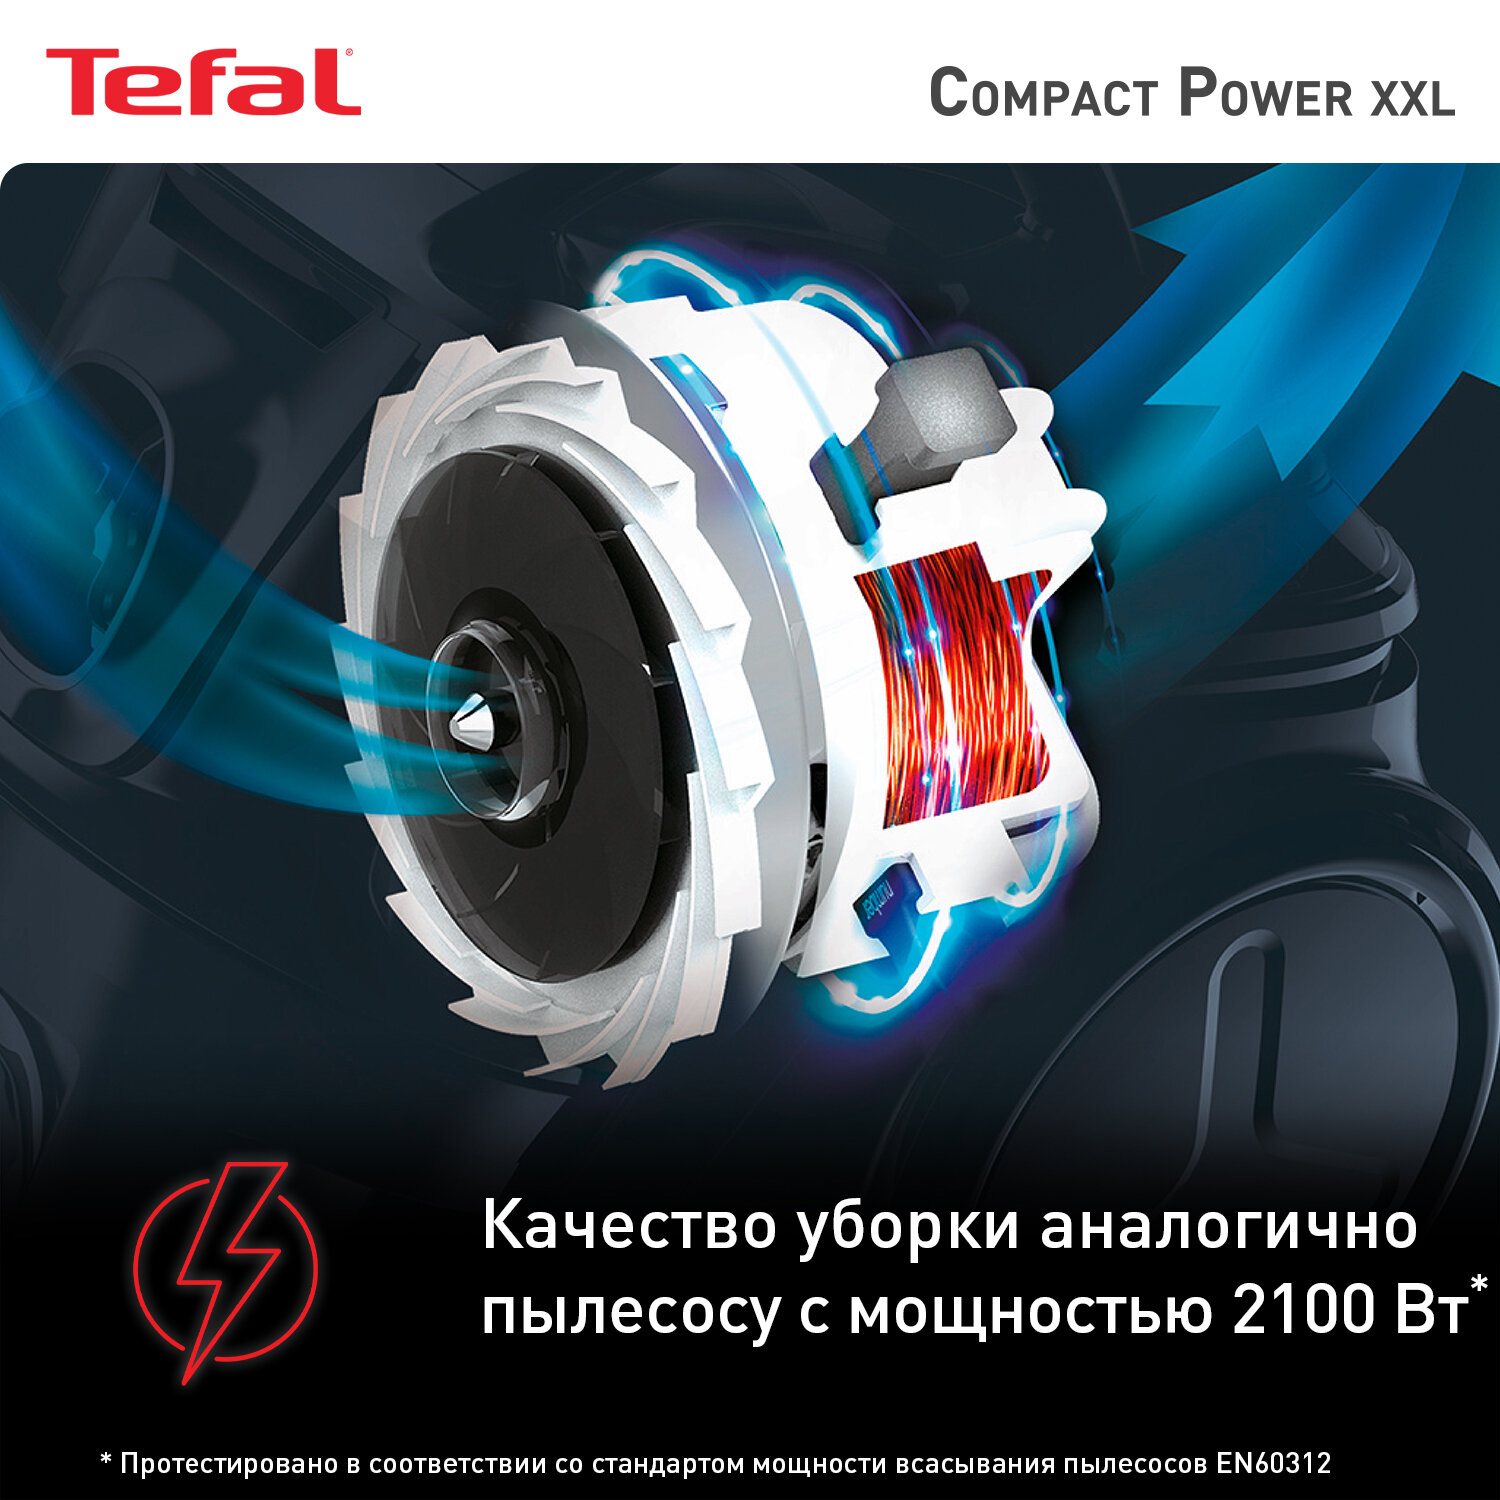 Пылесос Tefal Compact Power XXL TW4873